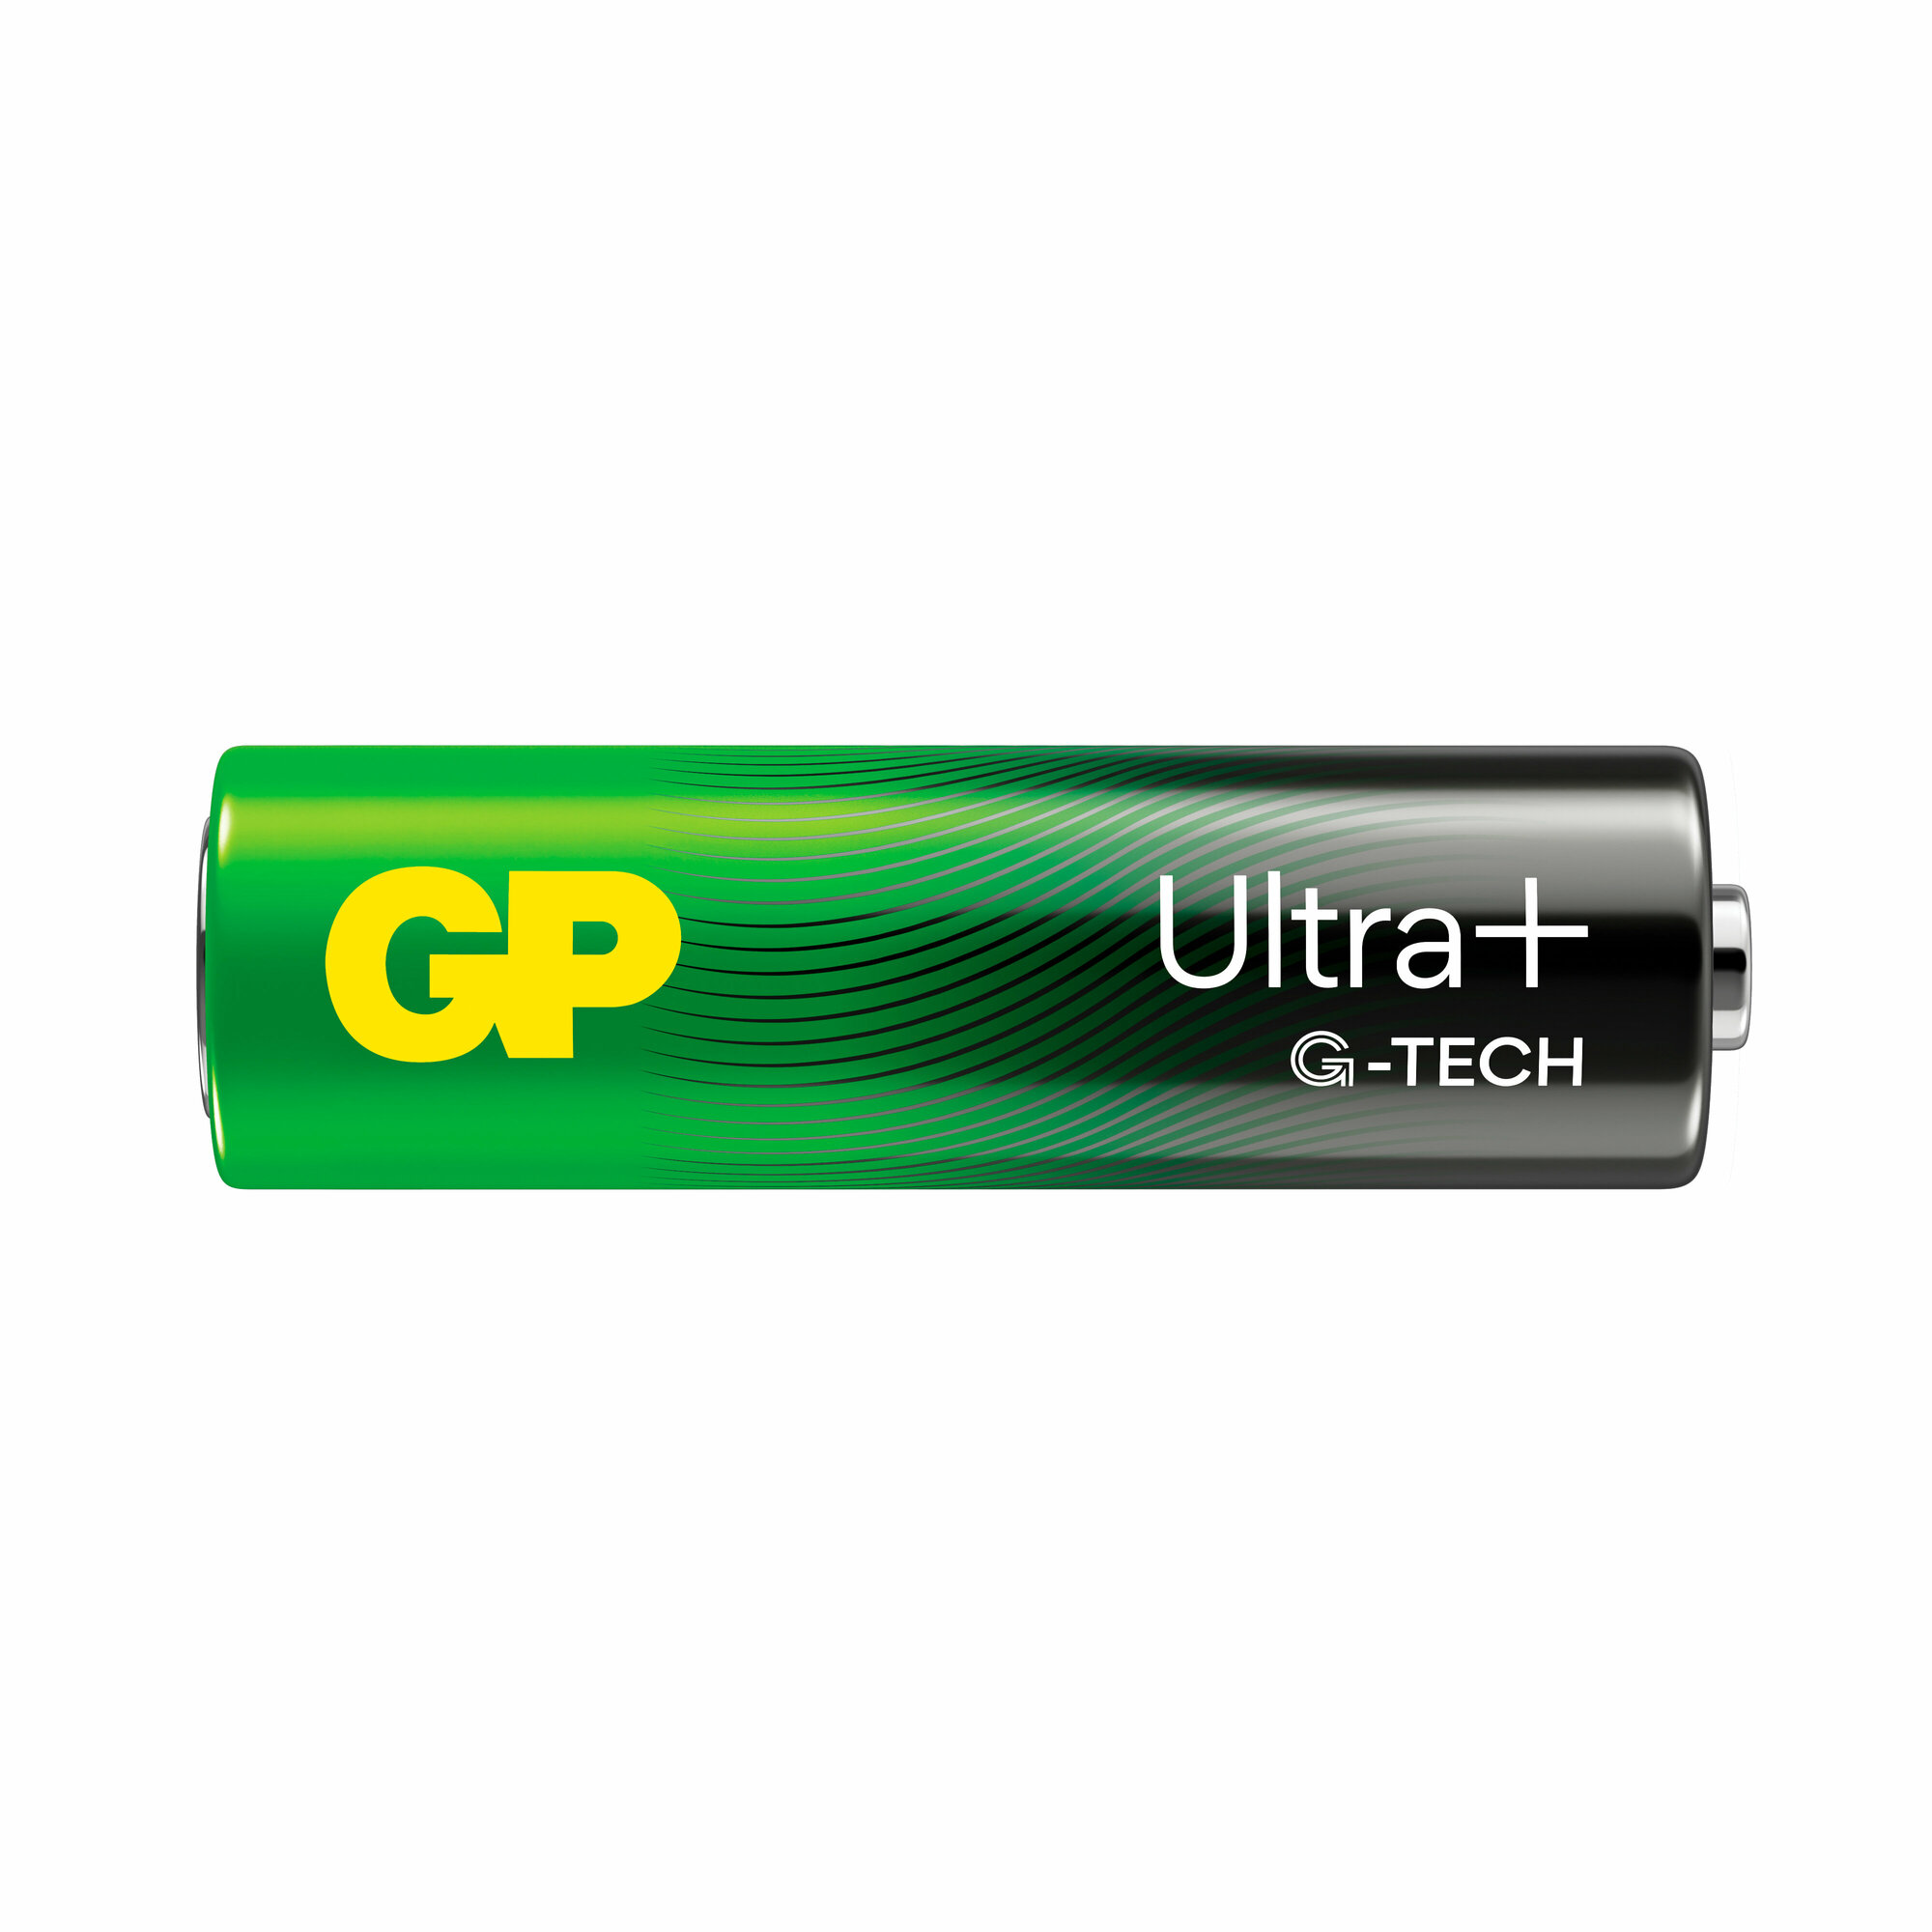 Батарейки АА пальчиковые алкалиновые GP G-TECH Ultra Plus 15AUPA21, набор 4 шт